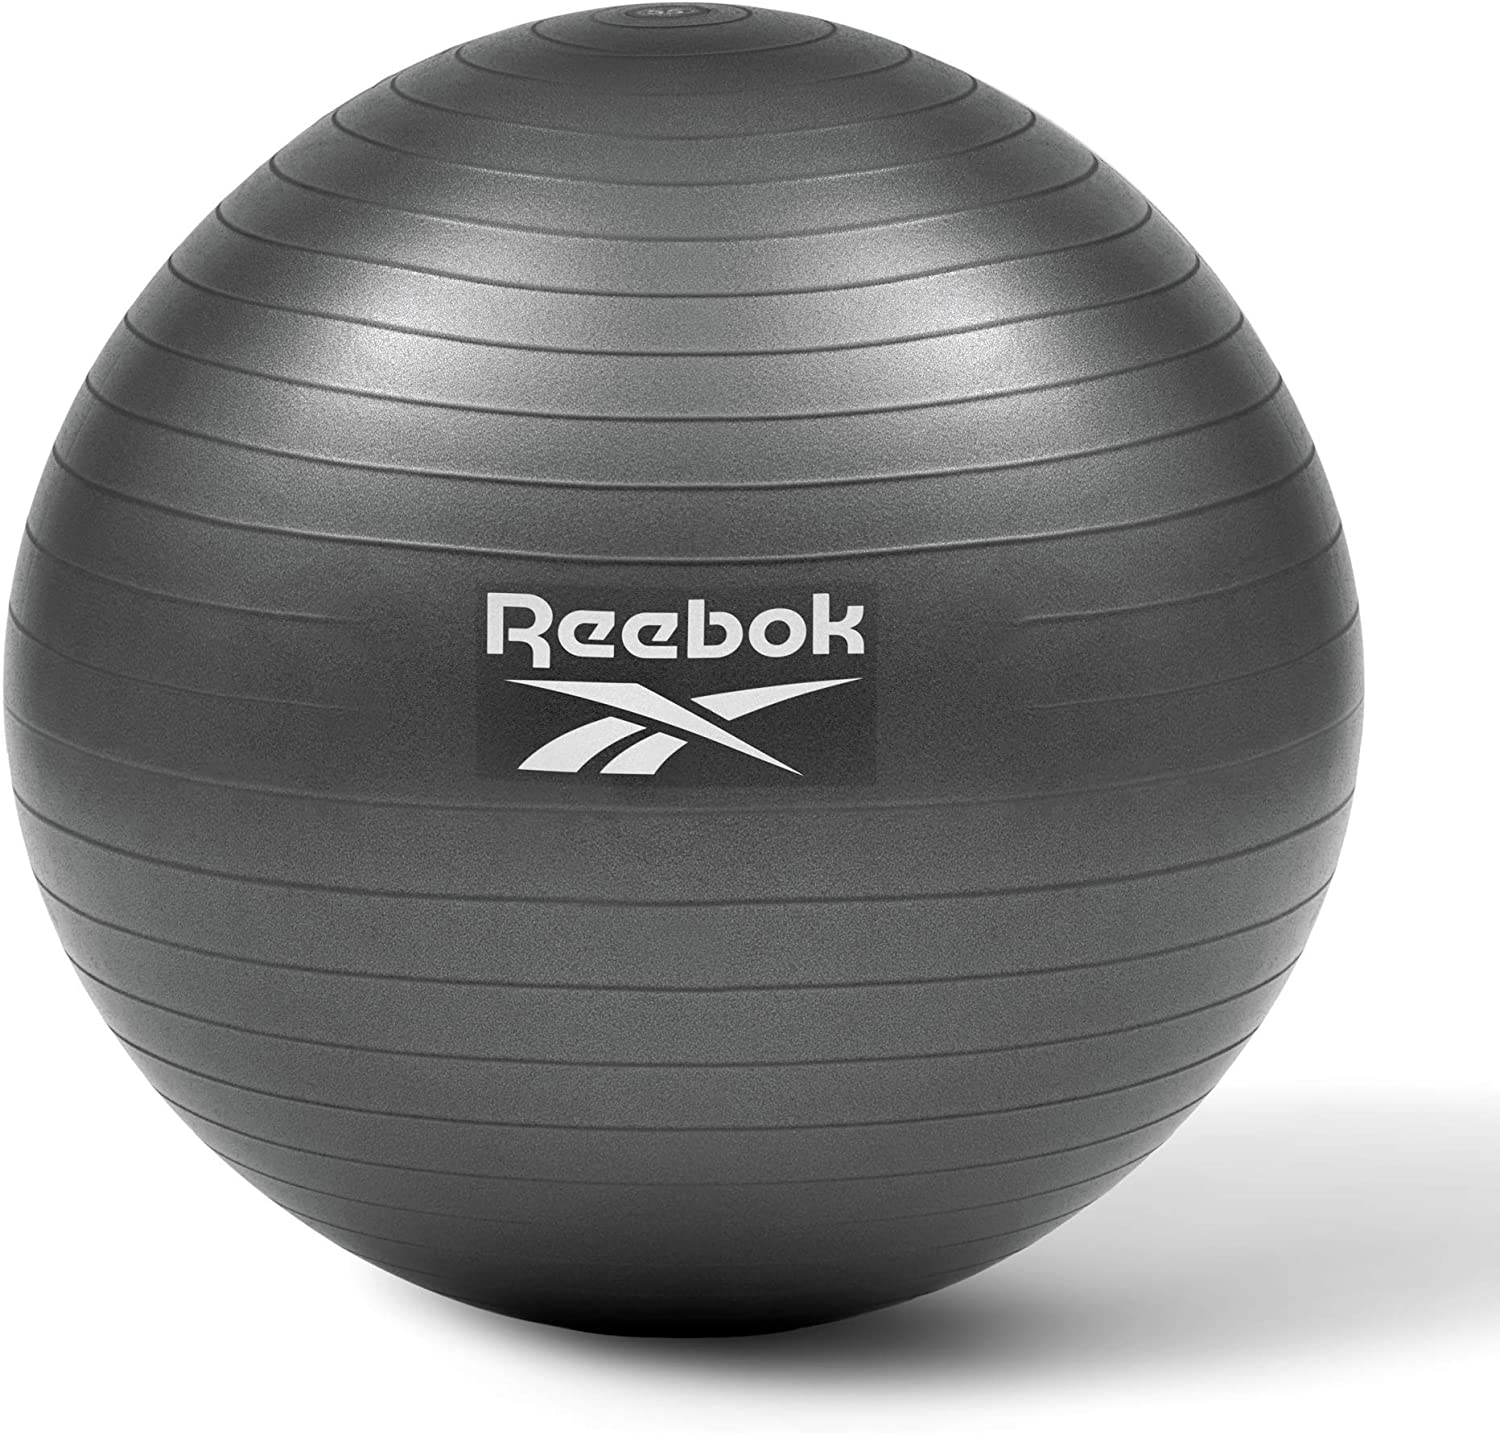 Reebok ジムボール 直径65cmの商品画像